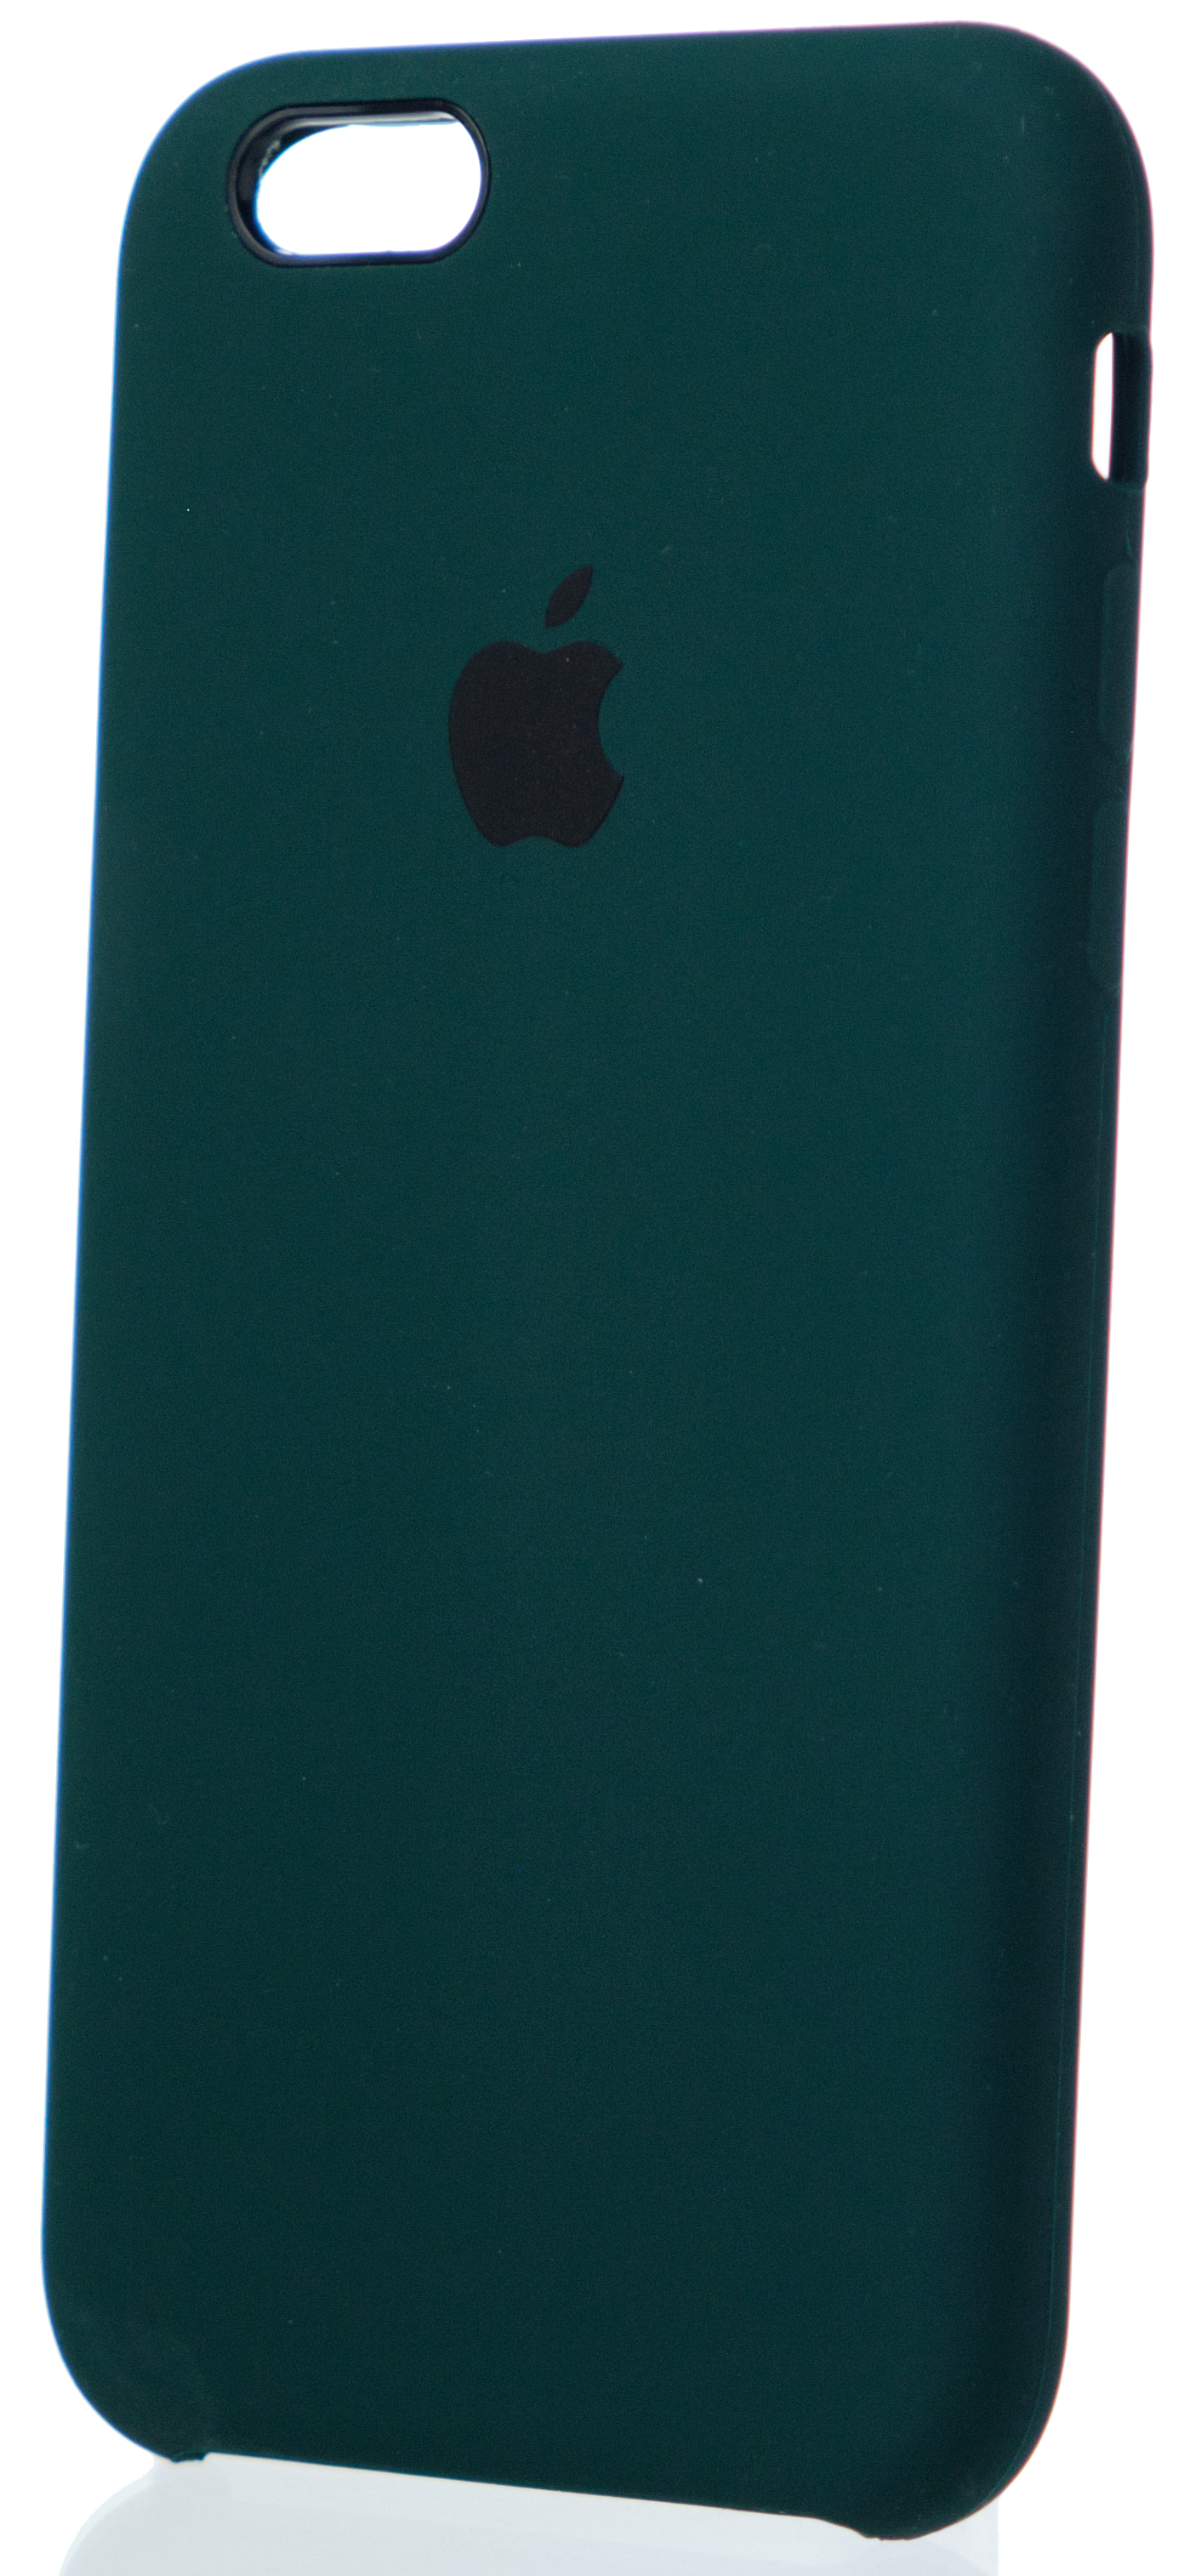 Чехол Silicone Case для iPhone 6/6s темно-зеленый